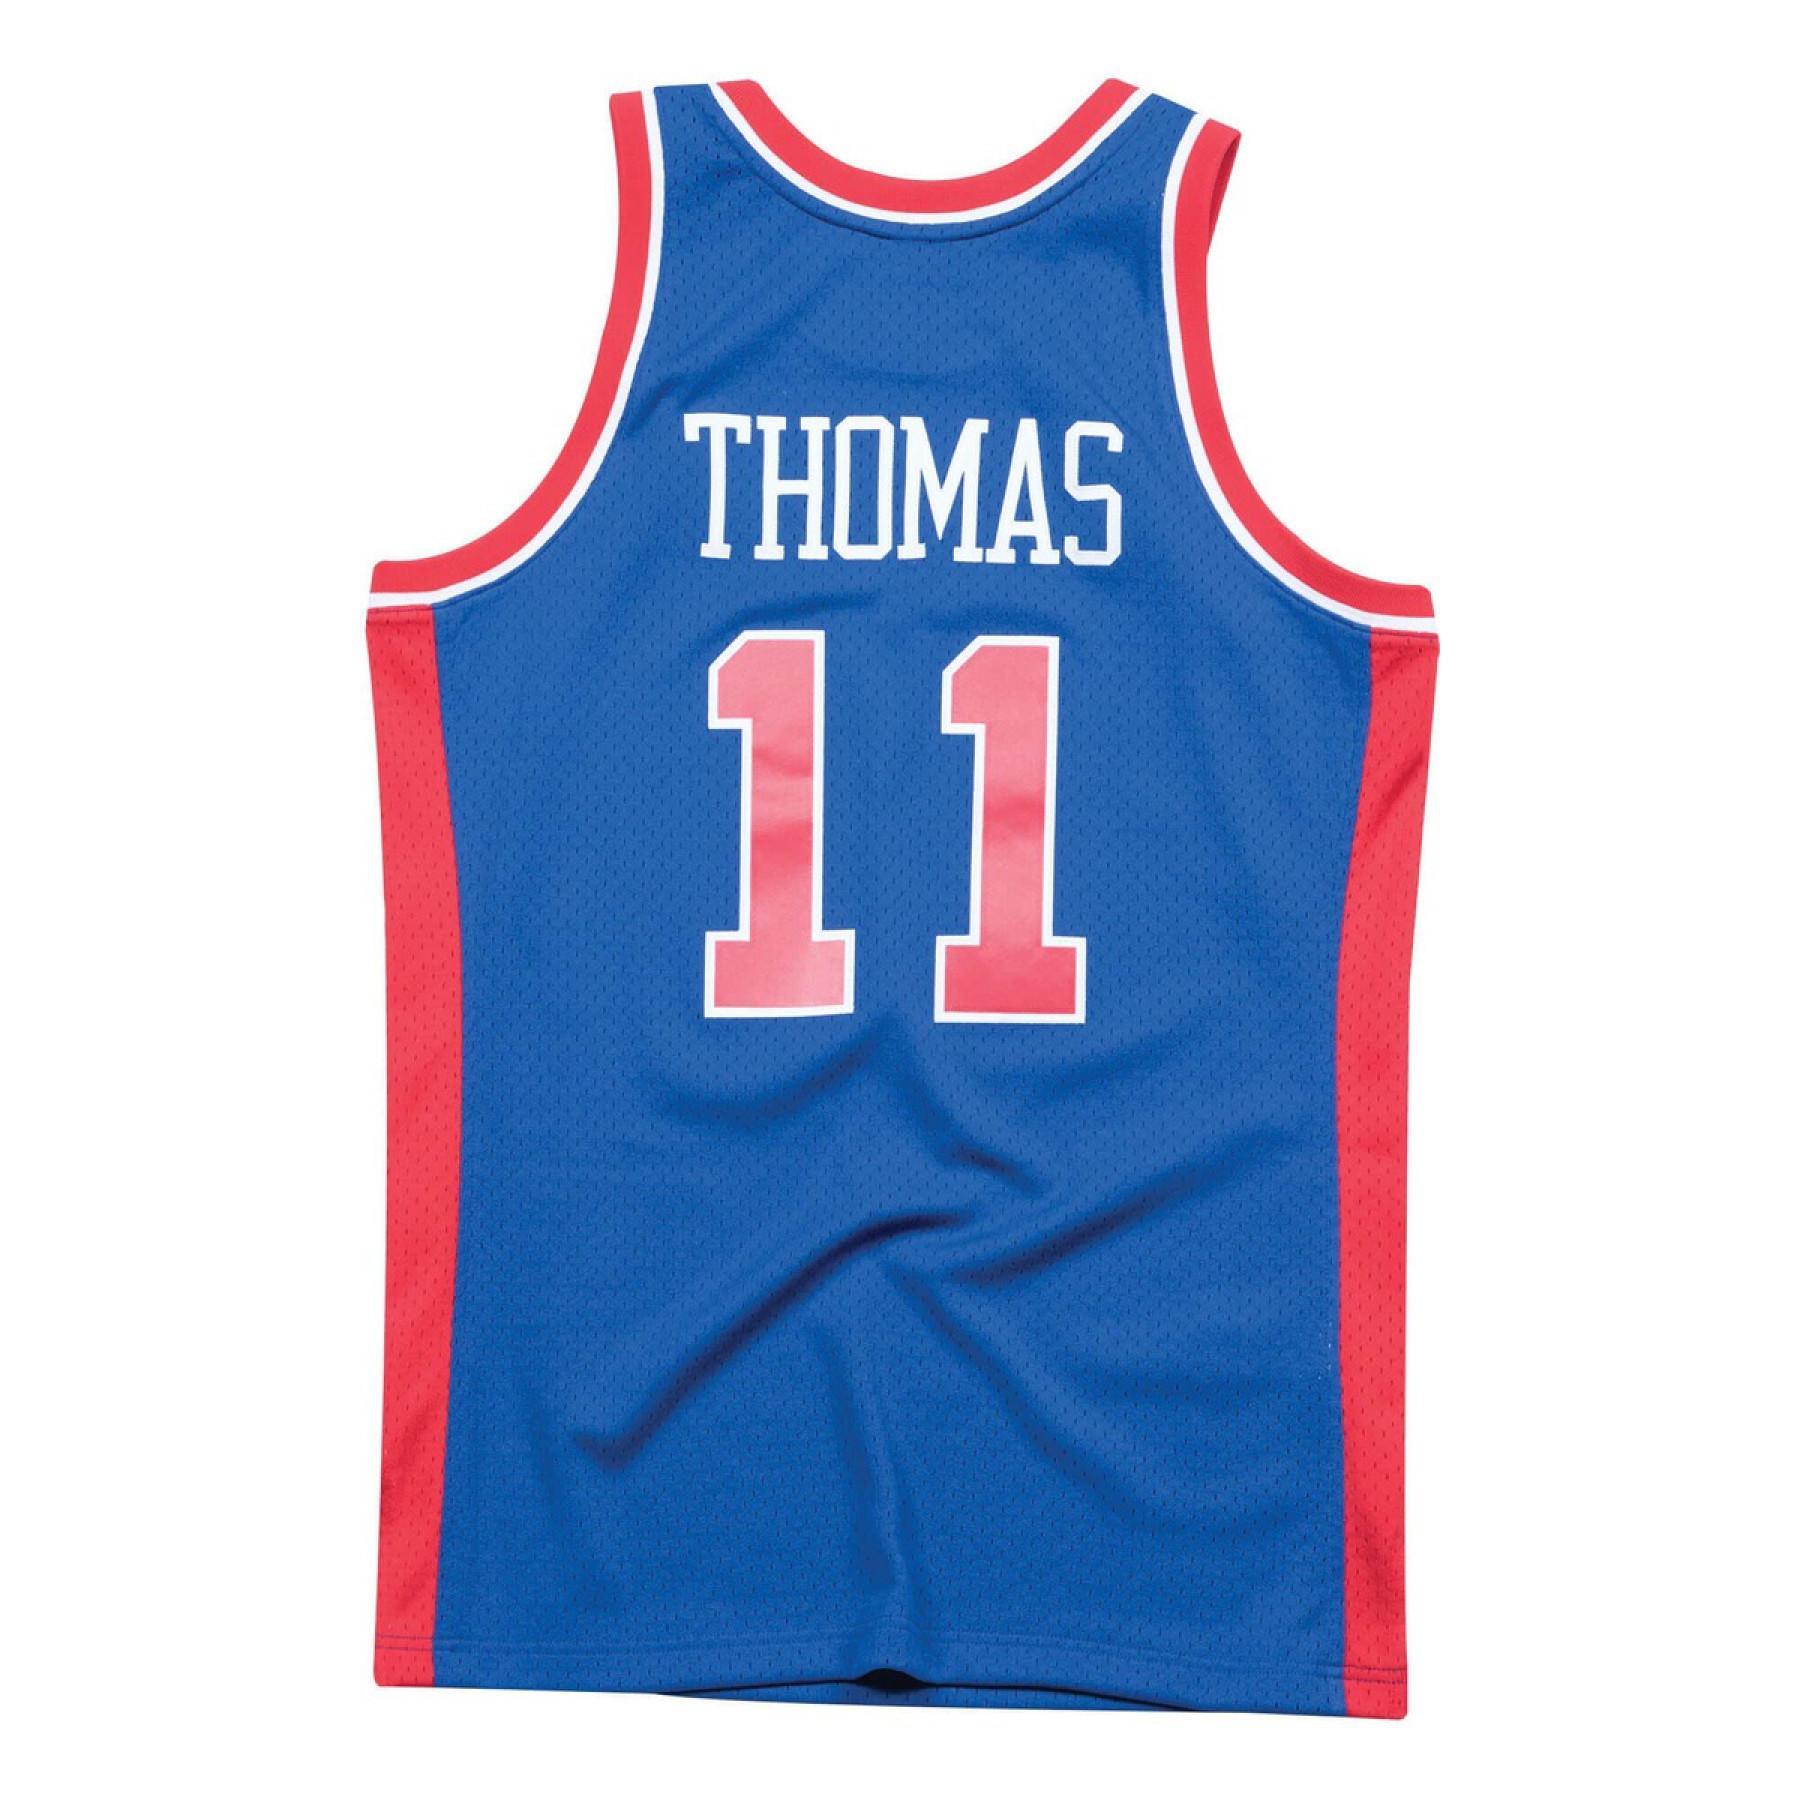 Maillot Detroit Pistons Isiah Thomas